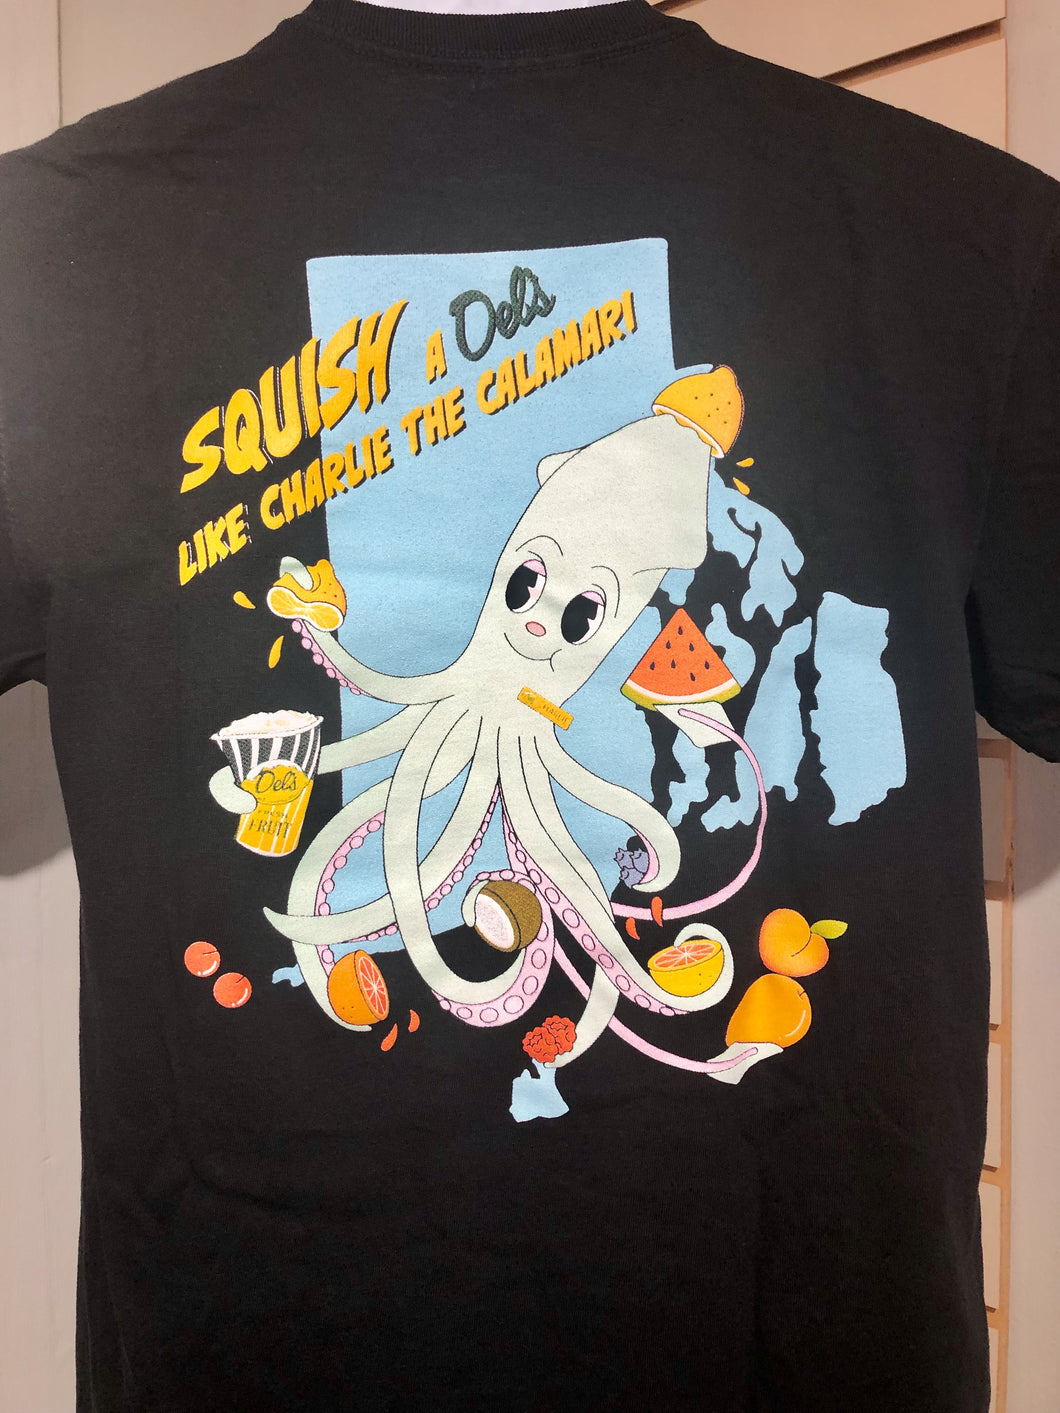 Del’s T-shirt, Charlie the Calamari